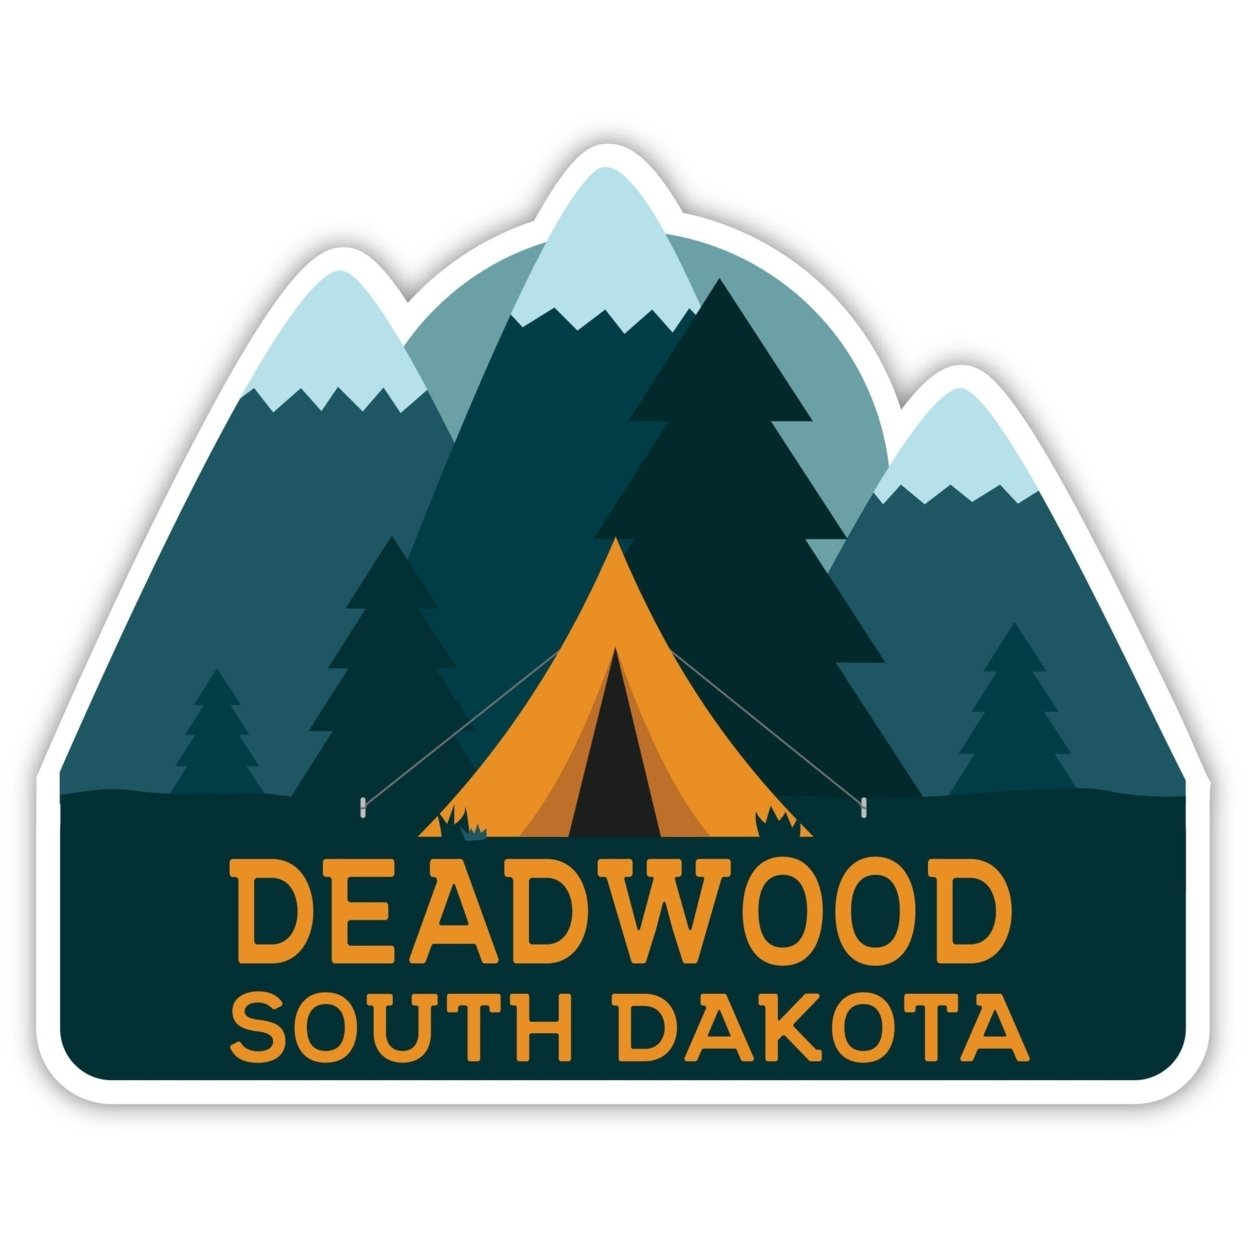 Deadwood South Dakota Souvenir Decorative Stickers (Choose Theme And Size) - 4-Pack, 12-Inch, Camp Life